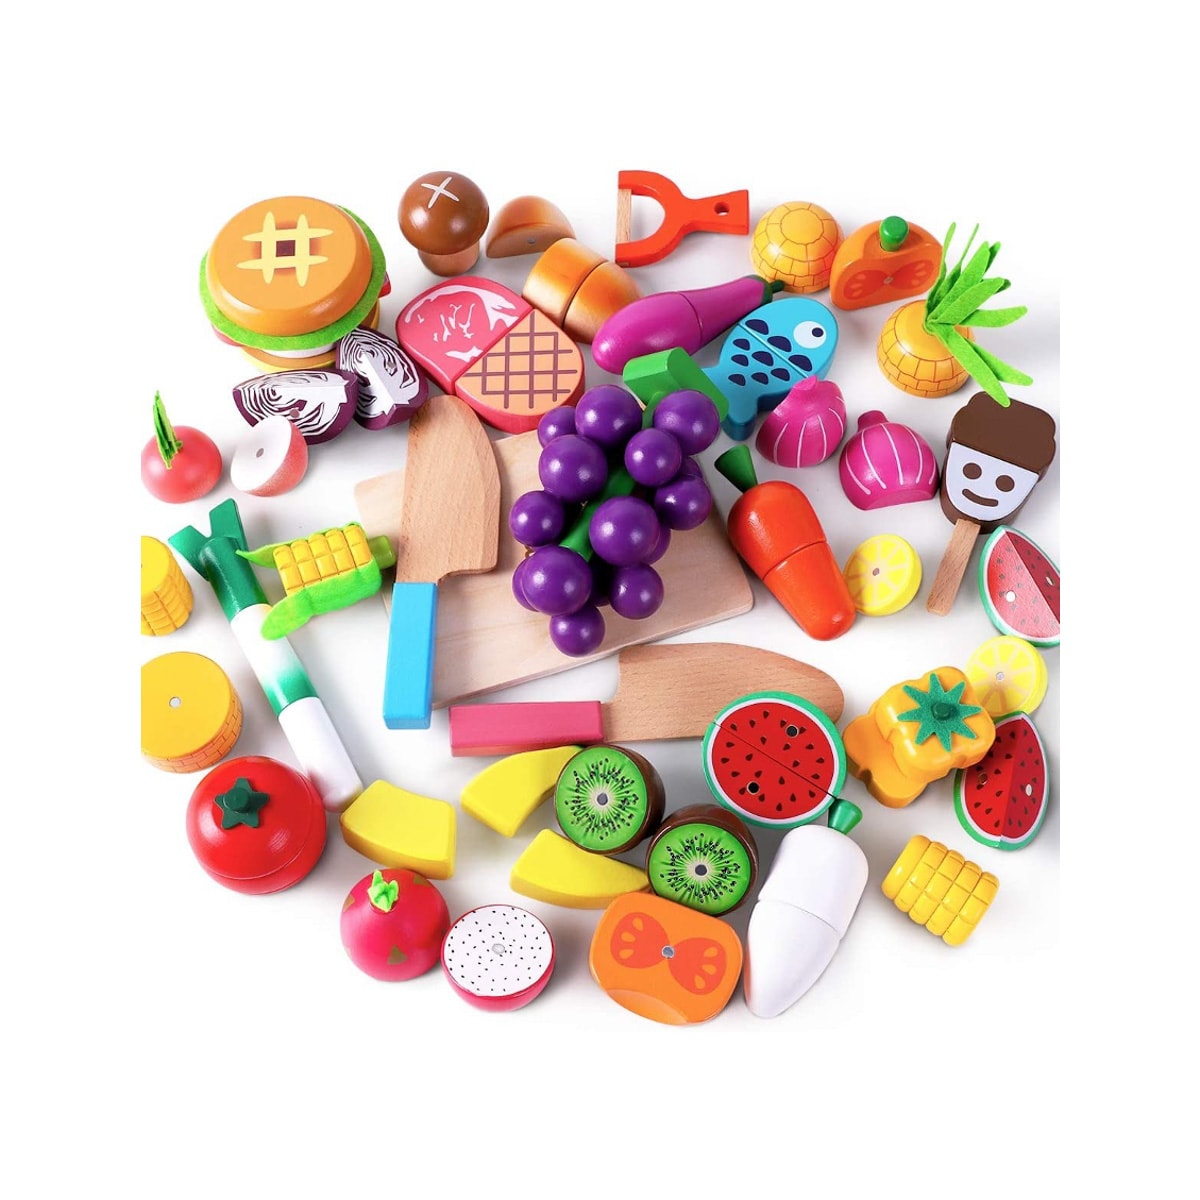 Bruvoalon 32Pcs Kids Play Kitchen Toys Set, Toddlers Pretend